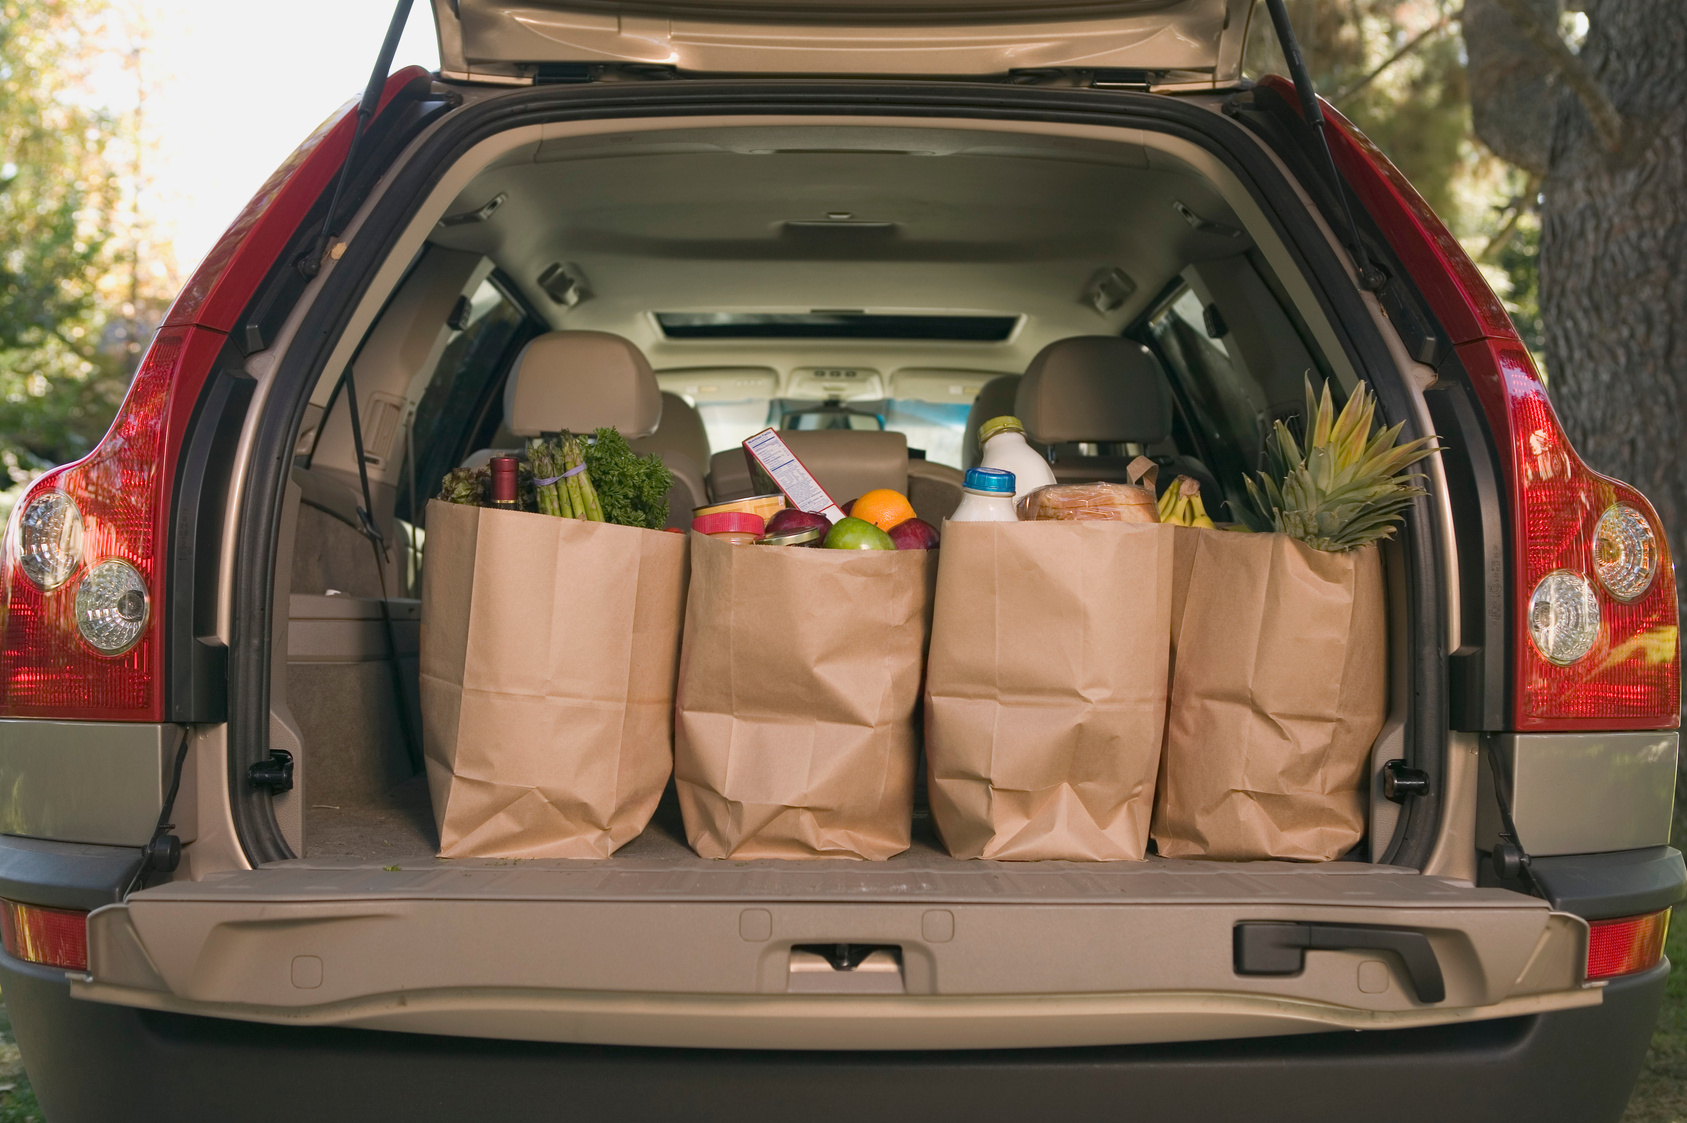 Grocery bags in car